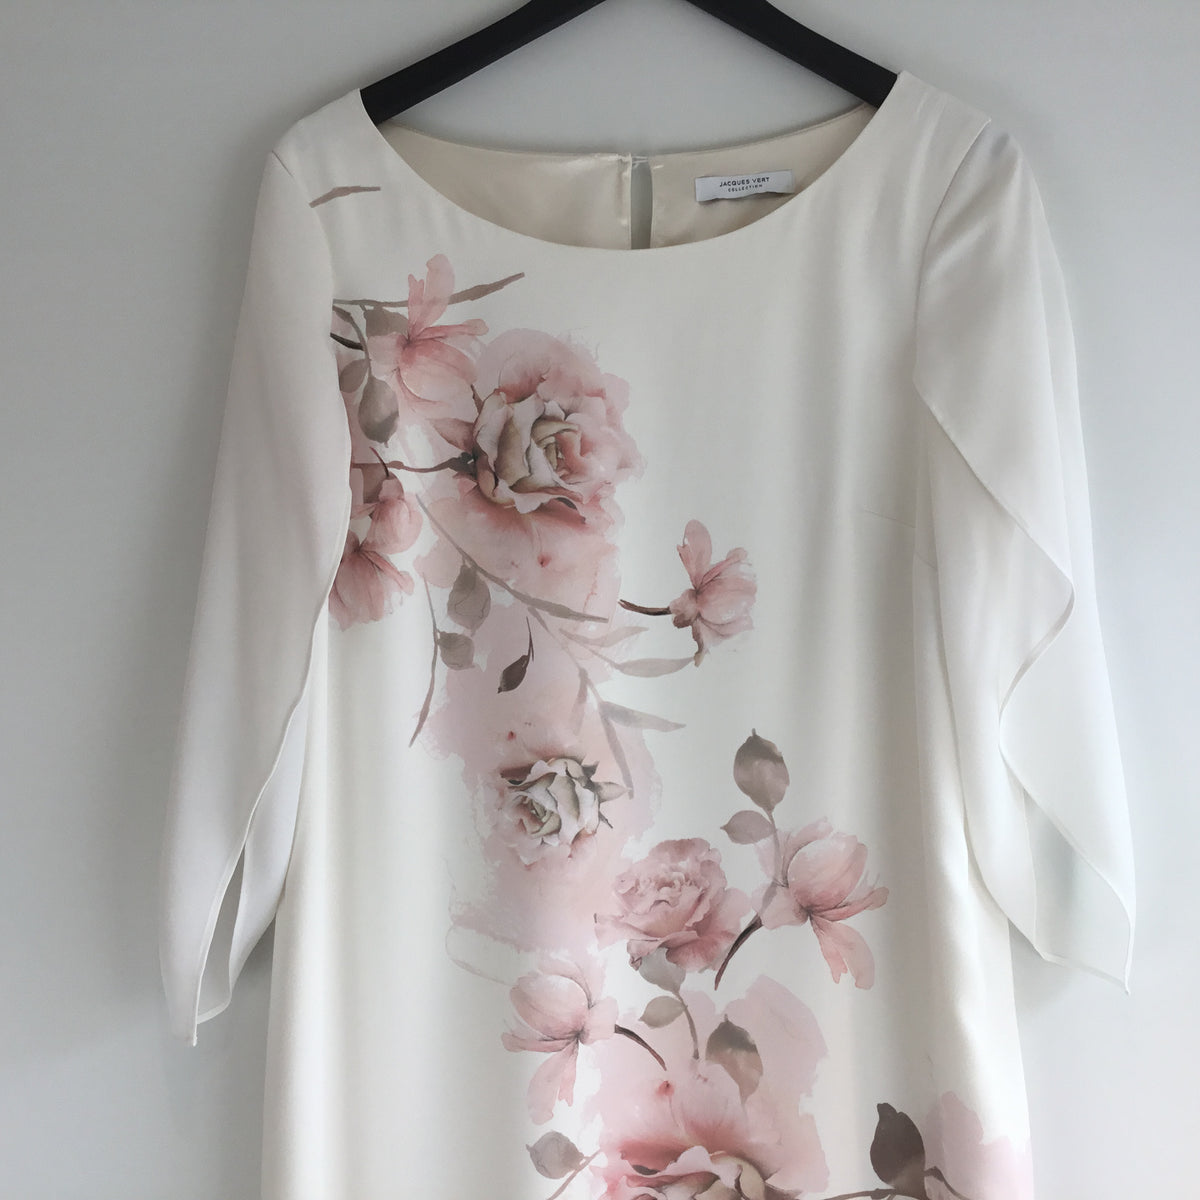 Jacques Vert rose print occasion dress Ivory/Blush Size 14